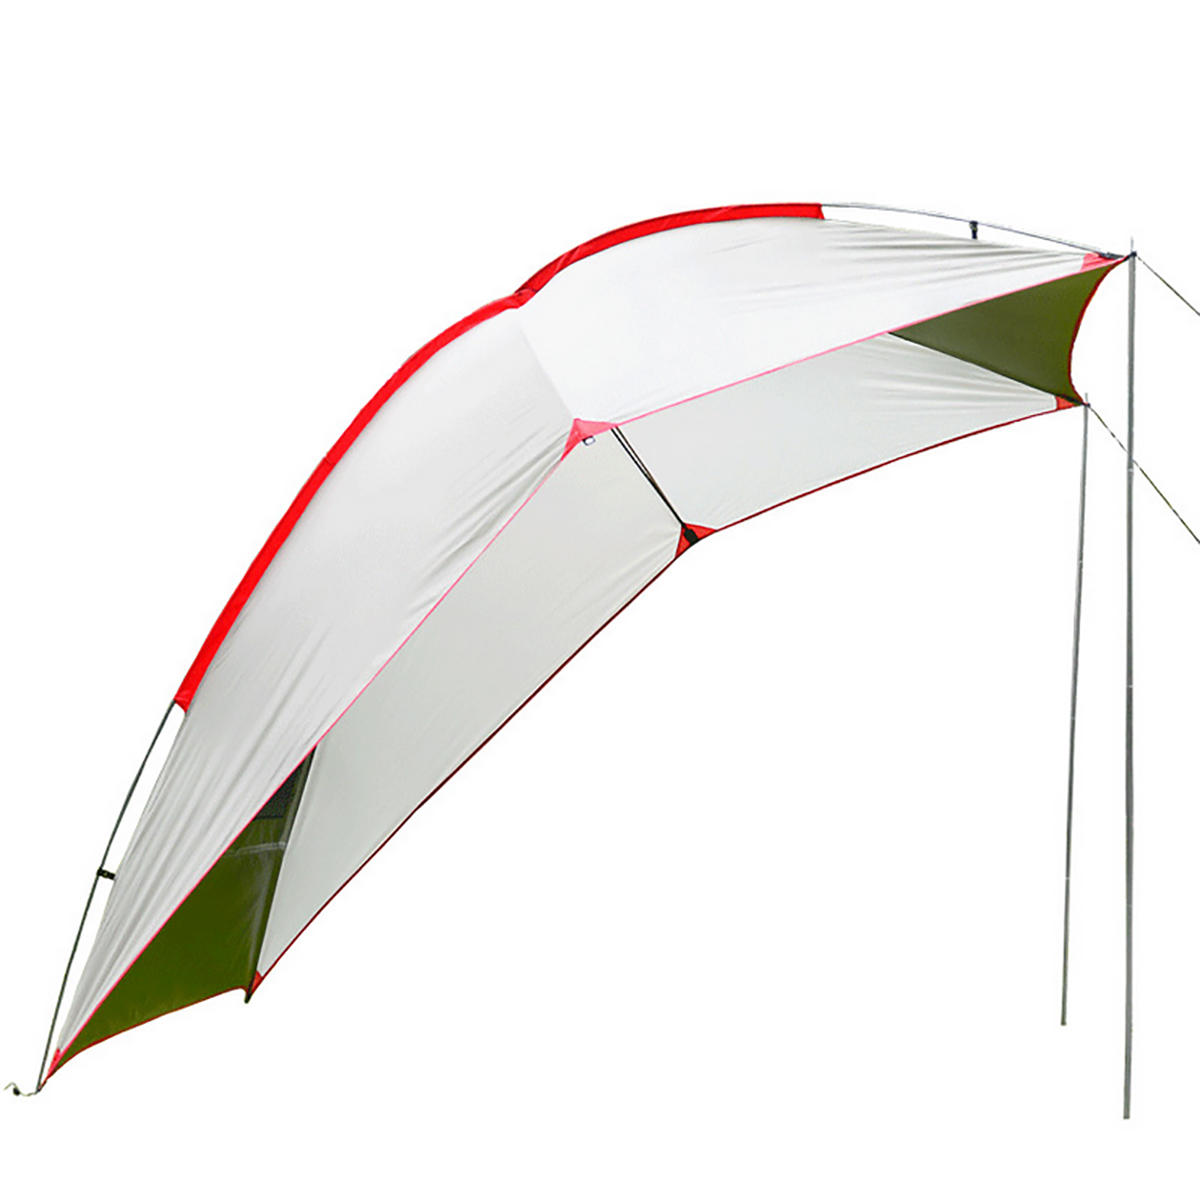 Outdoor Camping Car Trailer Rear Tent Waterproof Rain Beach Sunshade Shelter Canopy Awning